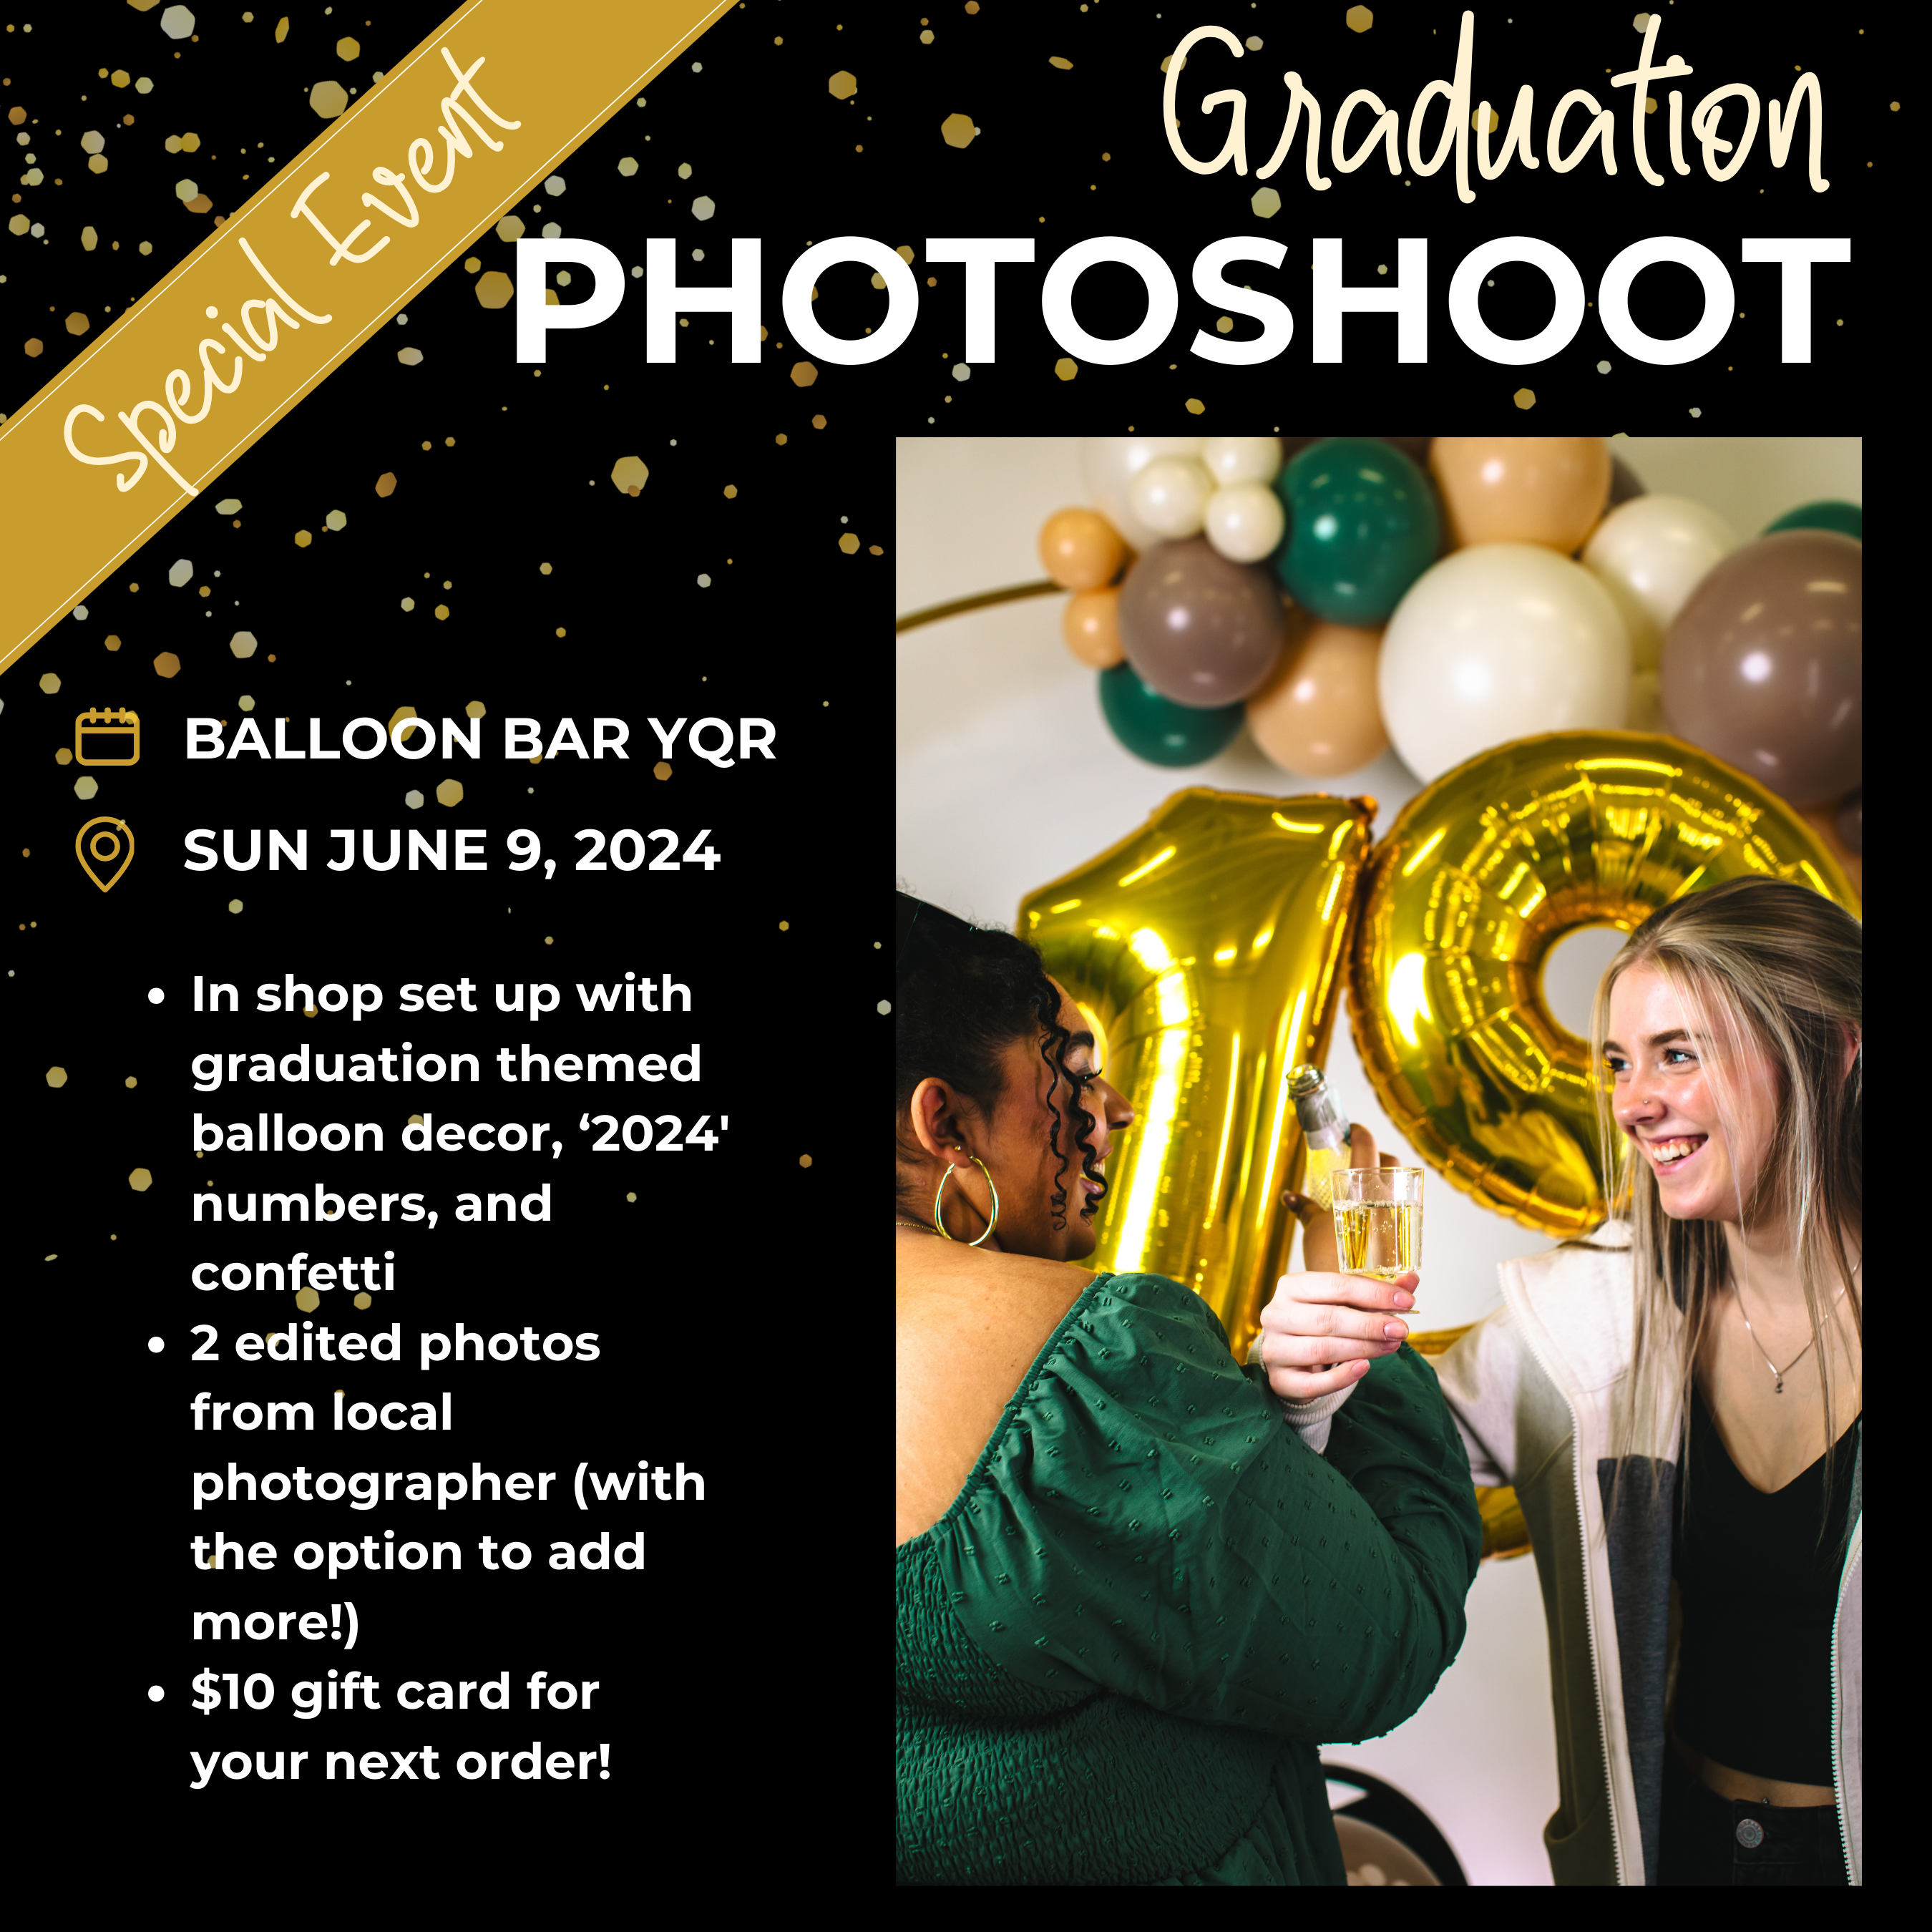 Seasonal Graduation Photoshoot - Sunday June 9, 2024